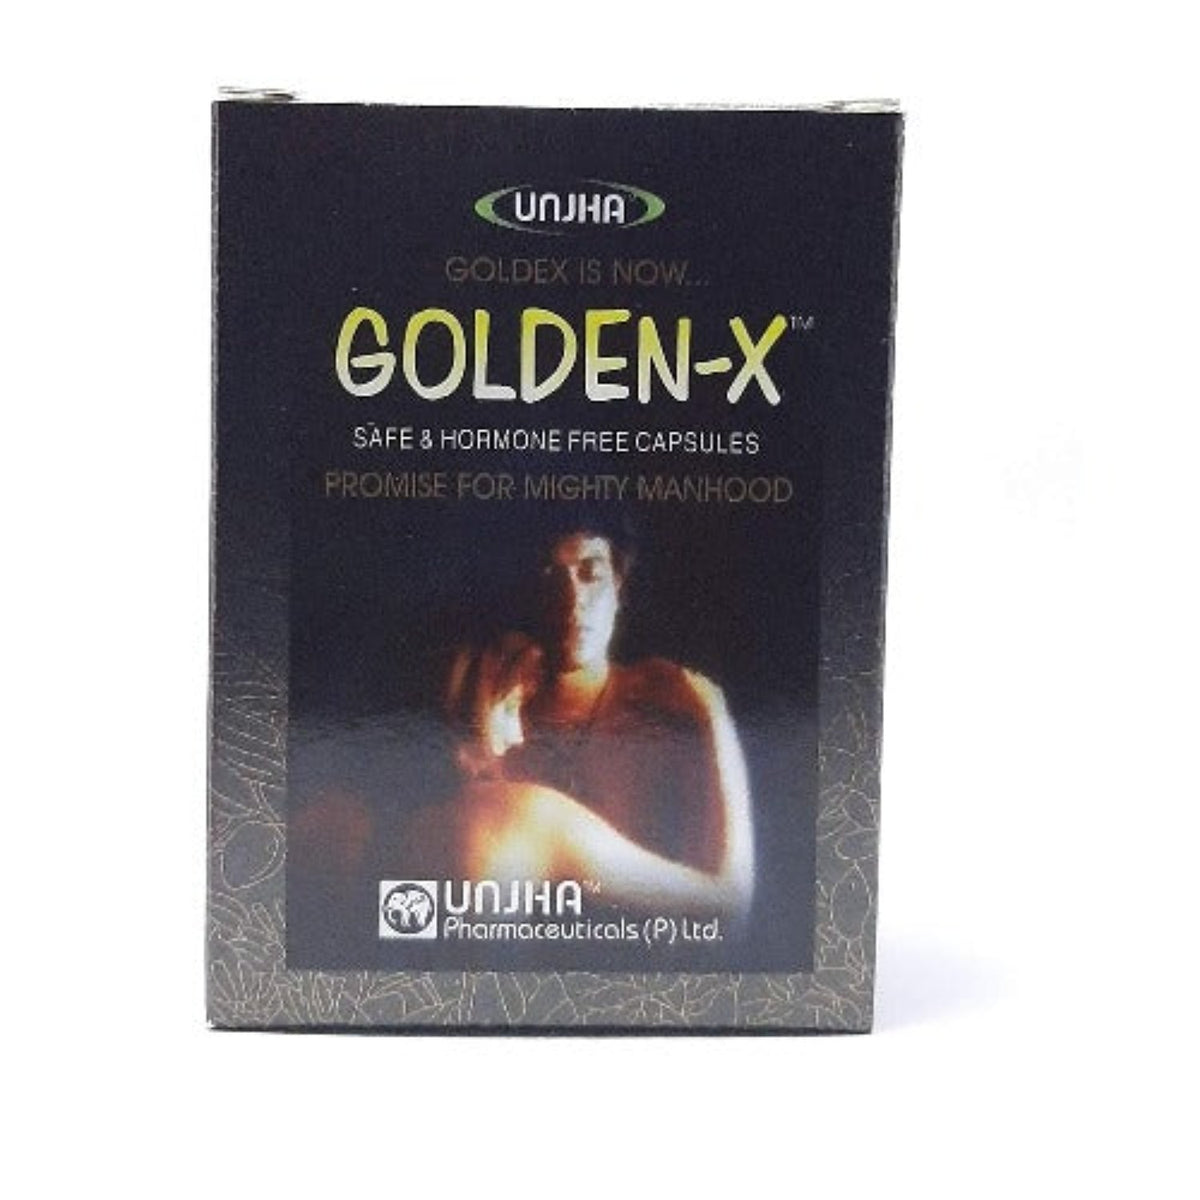 Unjha Ayurvedic Golden-X Safe Hormone Free Promise For Mighty Manhood Capsules